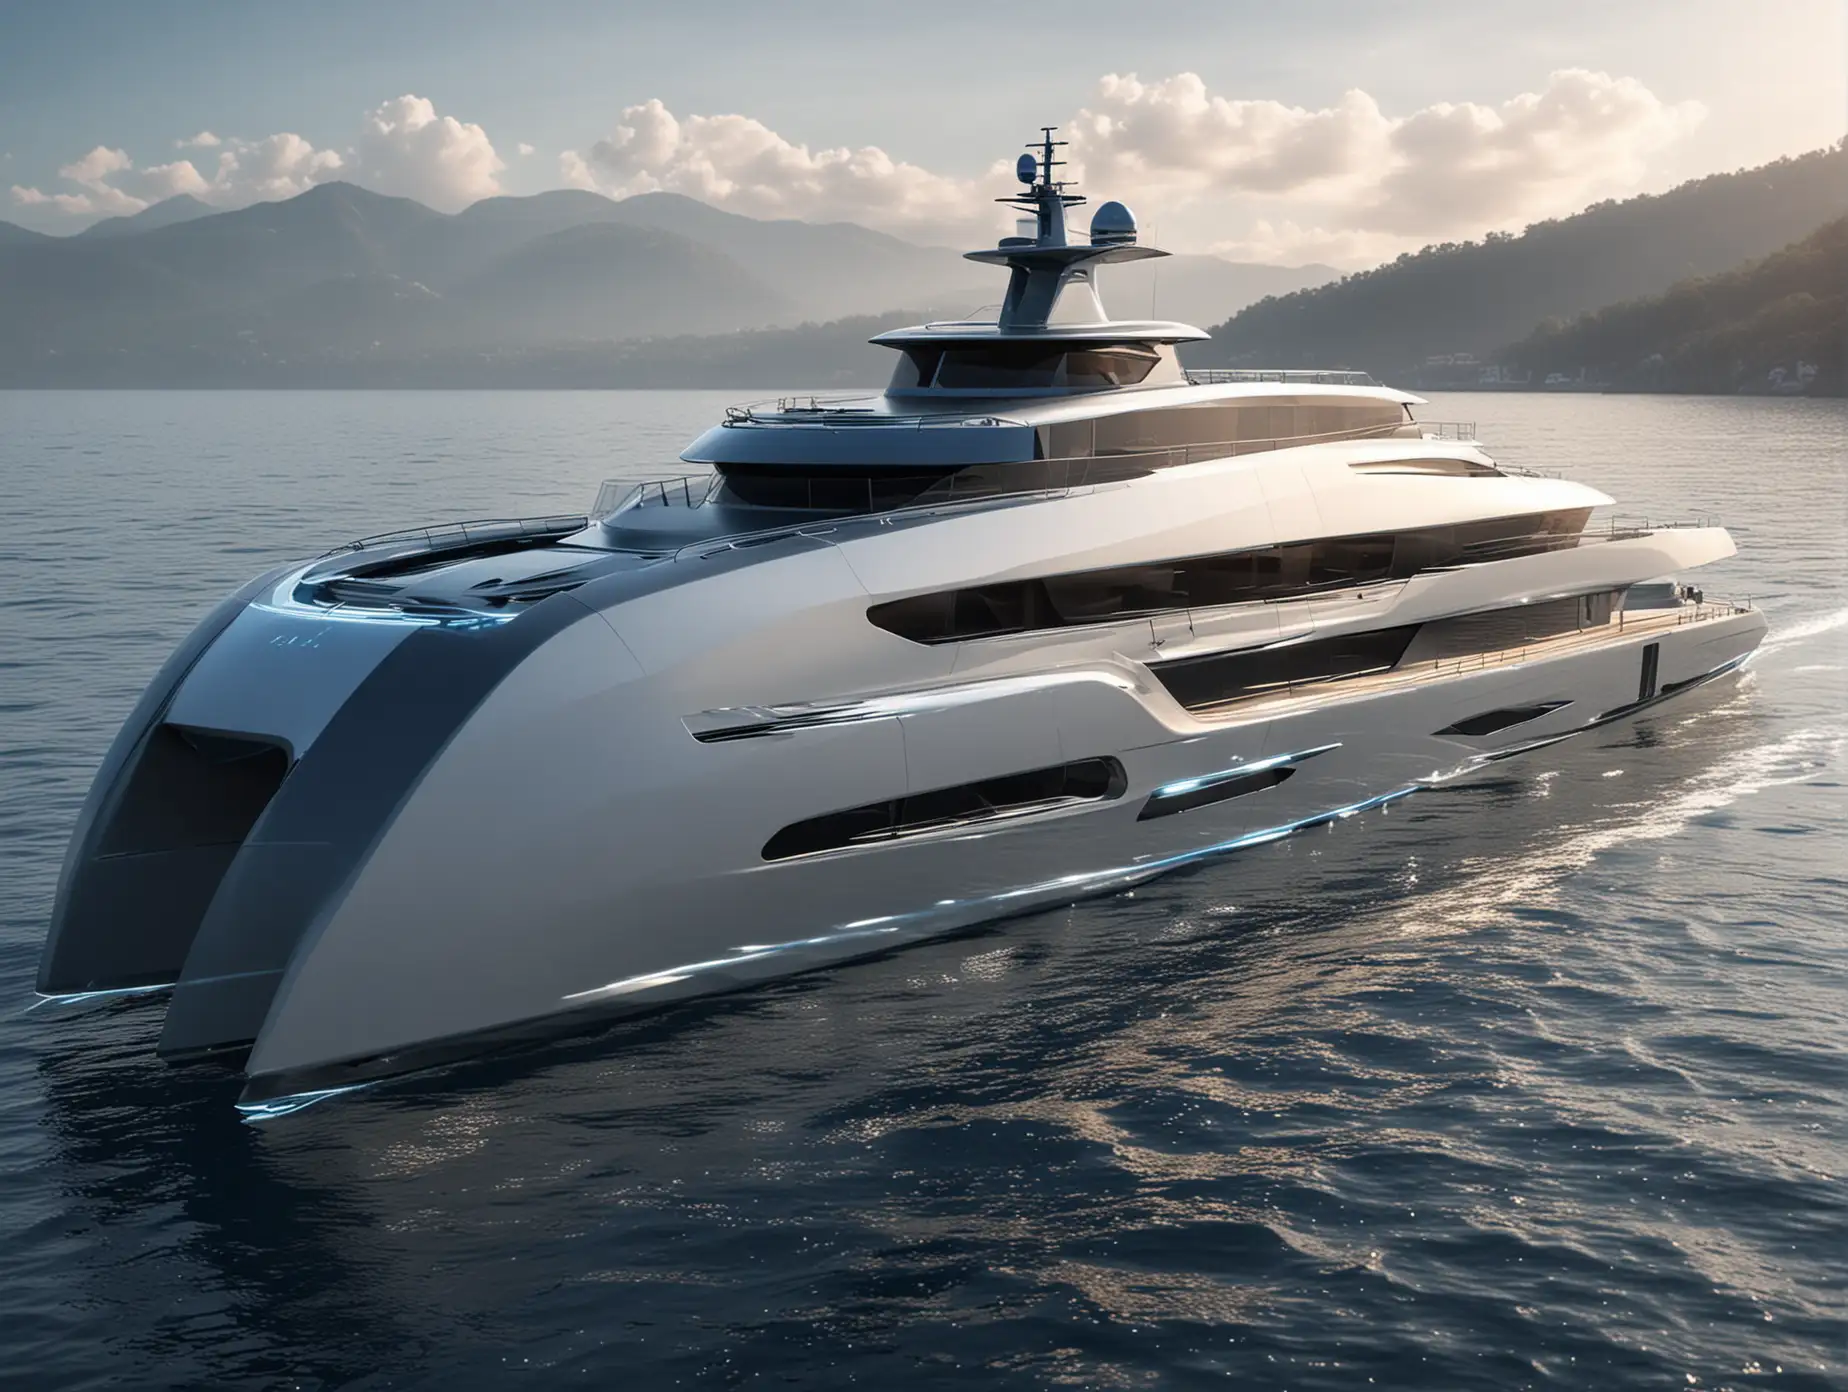 Futuristic Electric Yacht Concept CuttingEdge EcoFriendly Luxury Vessel